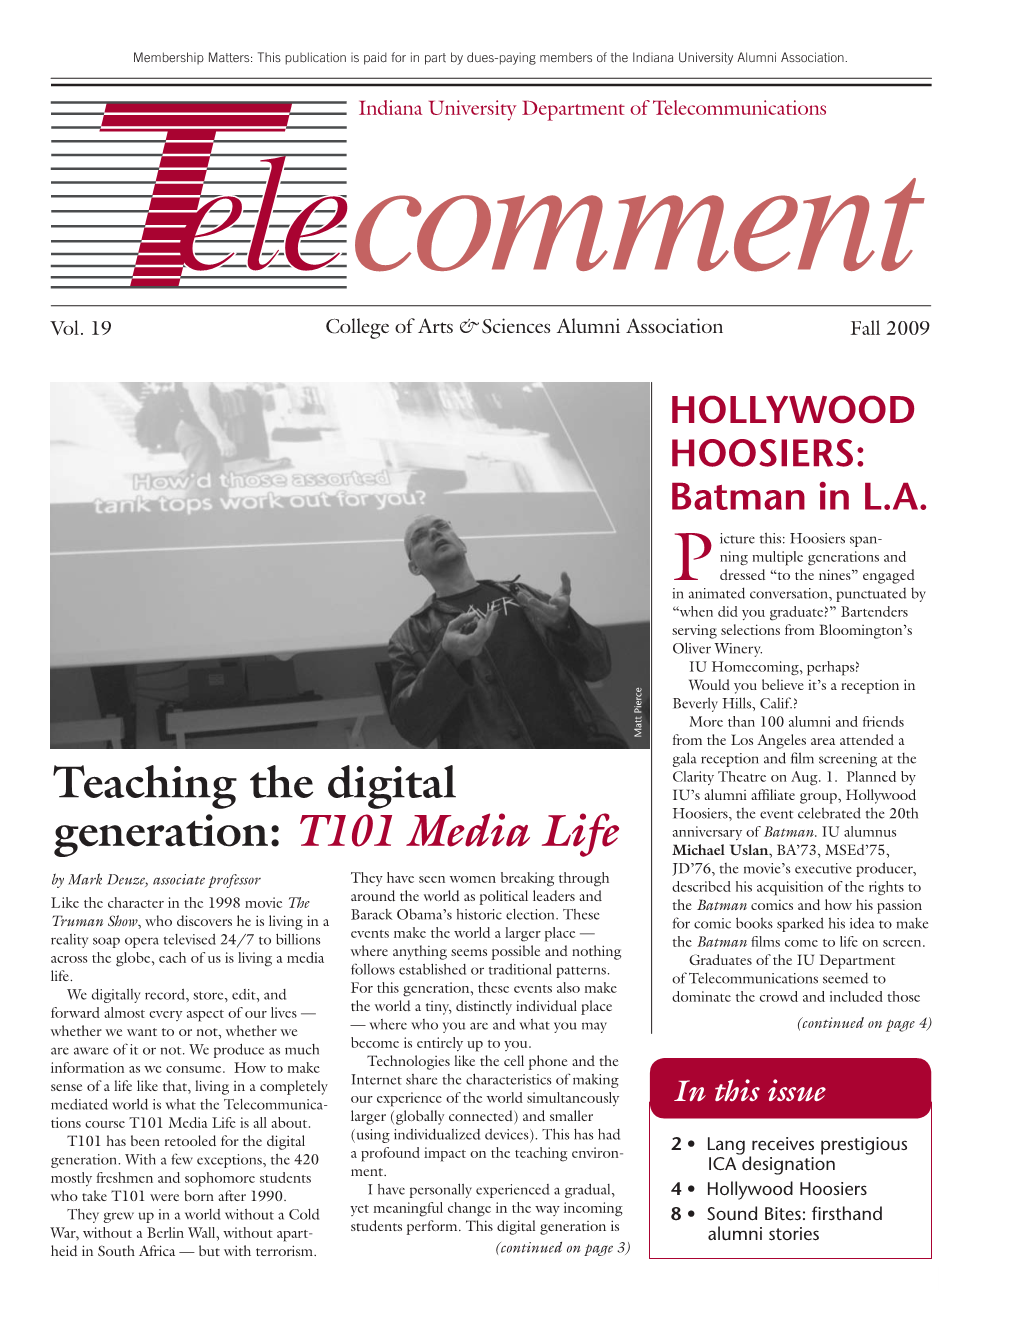 Teaching the Digital Generation: T101 Media Life